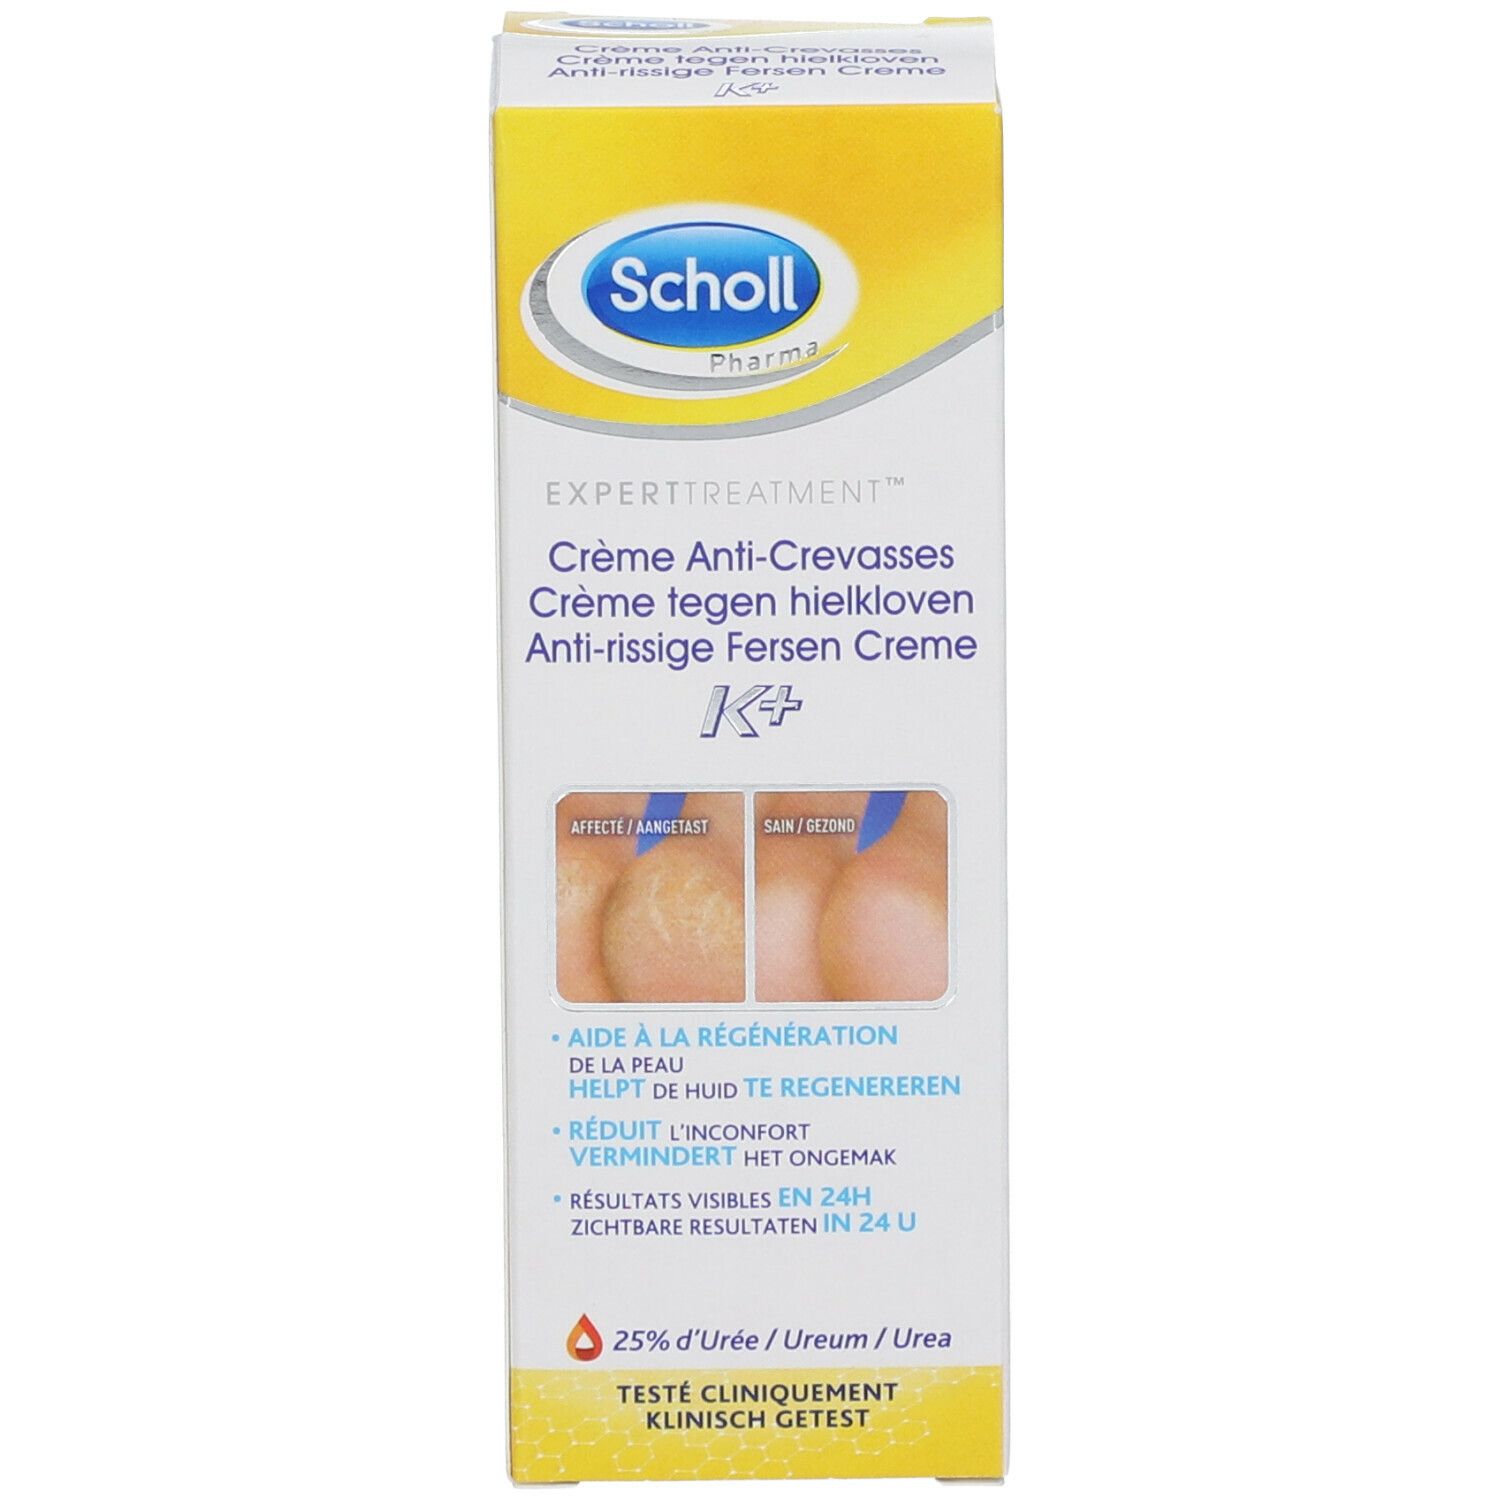 Scholl® Crème ​Anti-Crevasses Active Repair K+